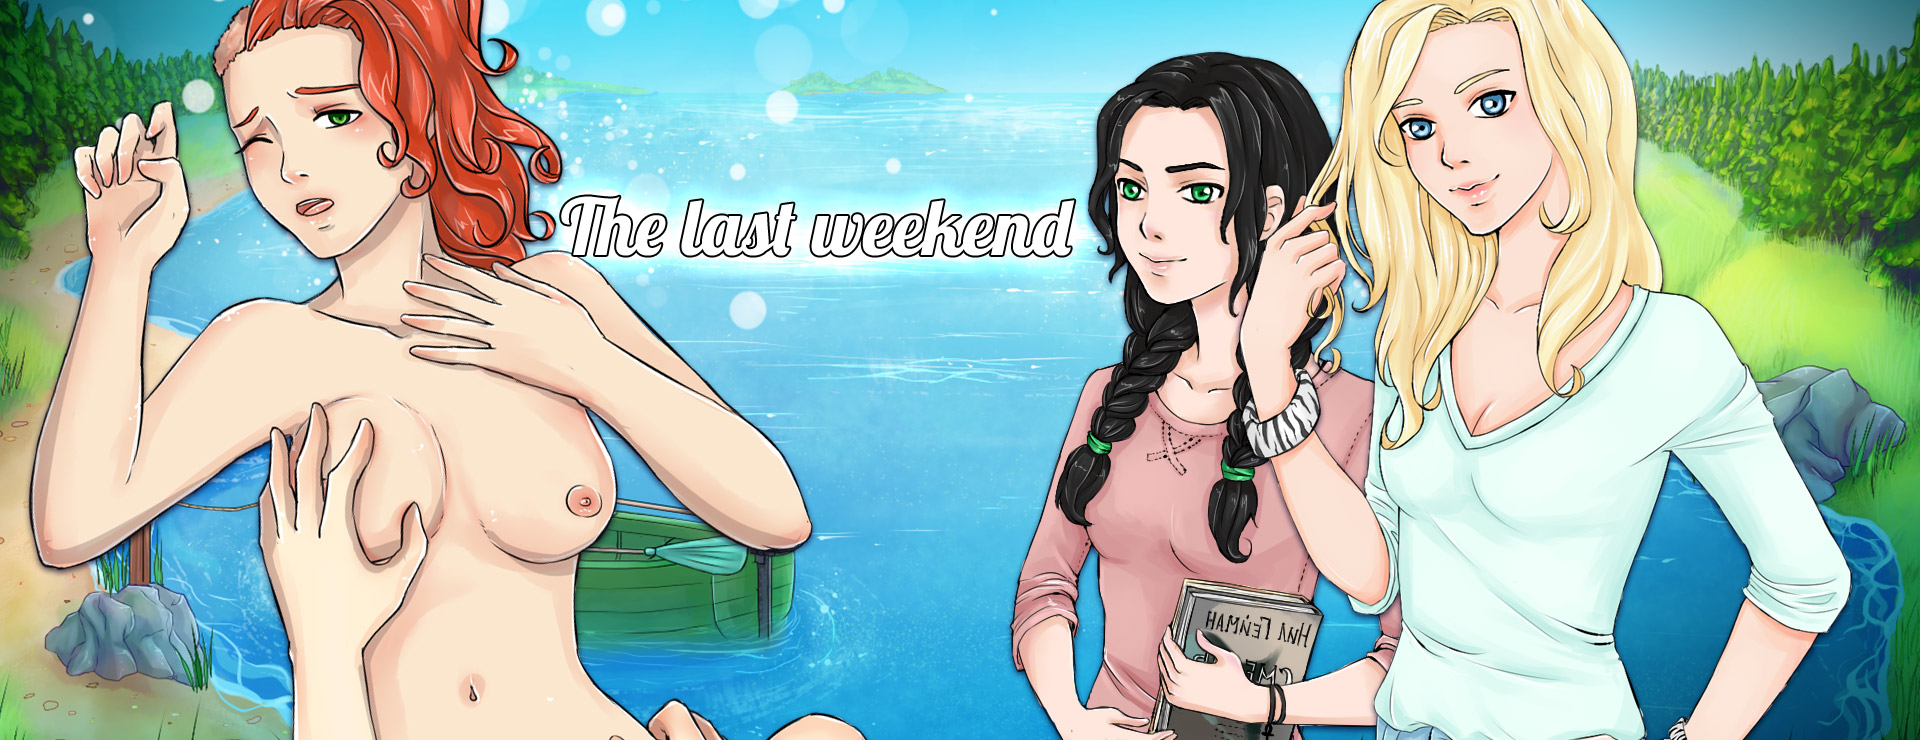 The Last Weekend - Japanisches Adventure Spiel